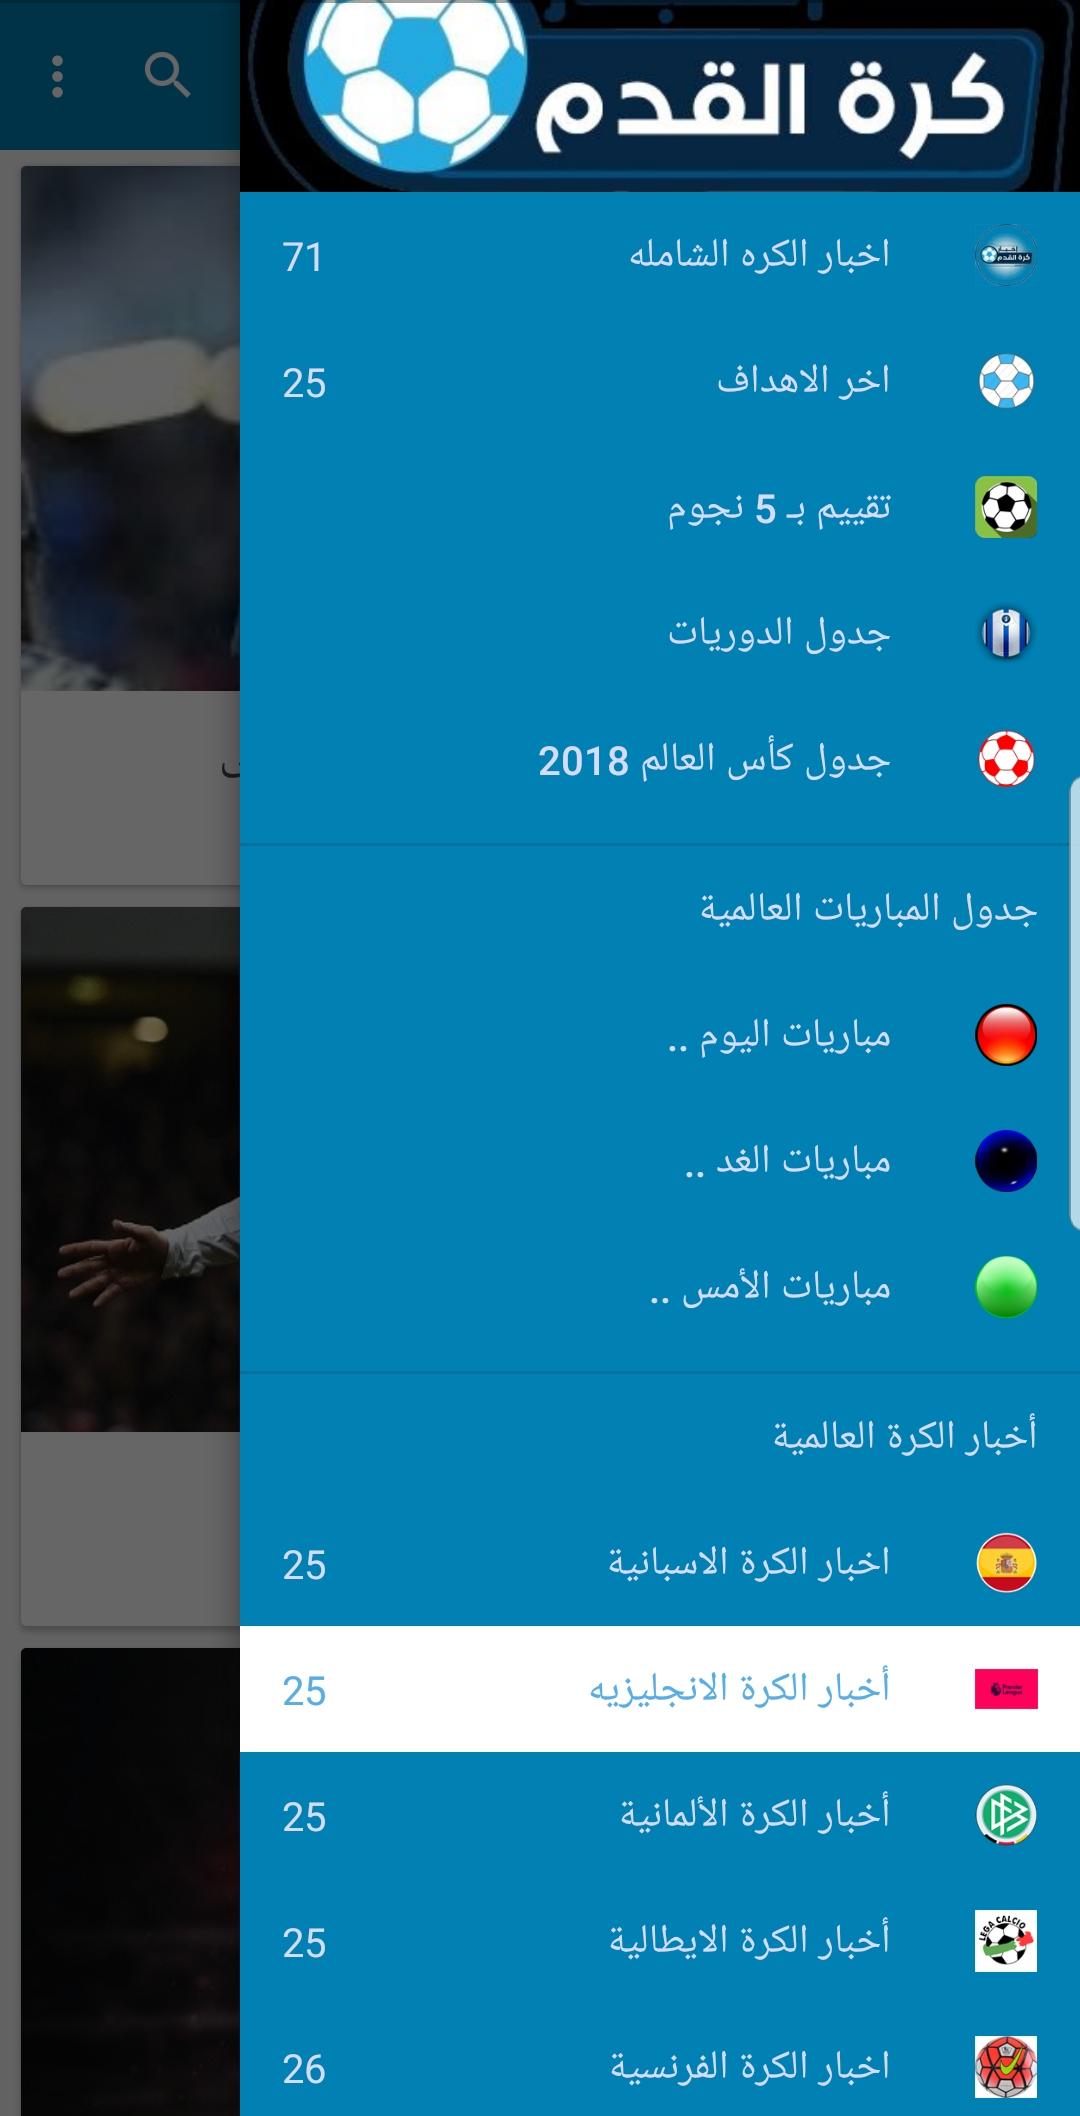 اخبار كرة القدم for Android - APK Download